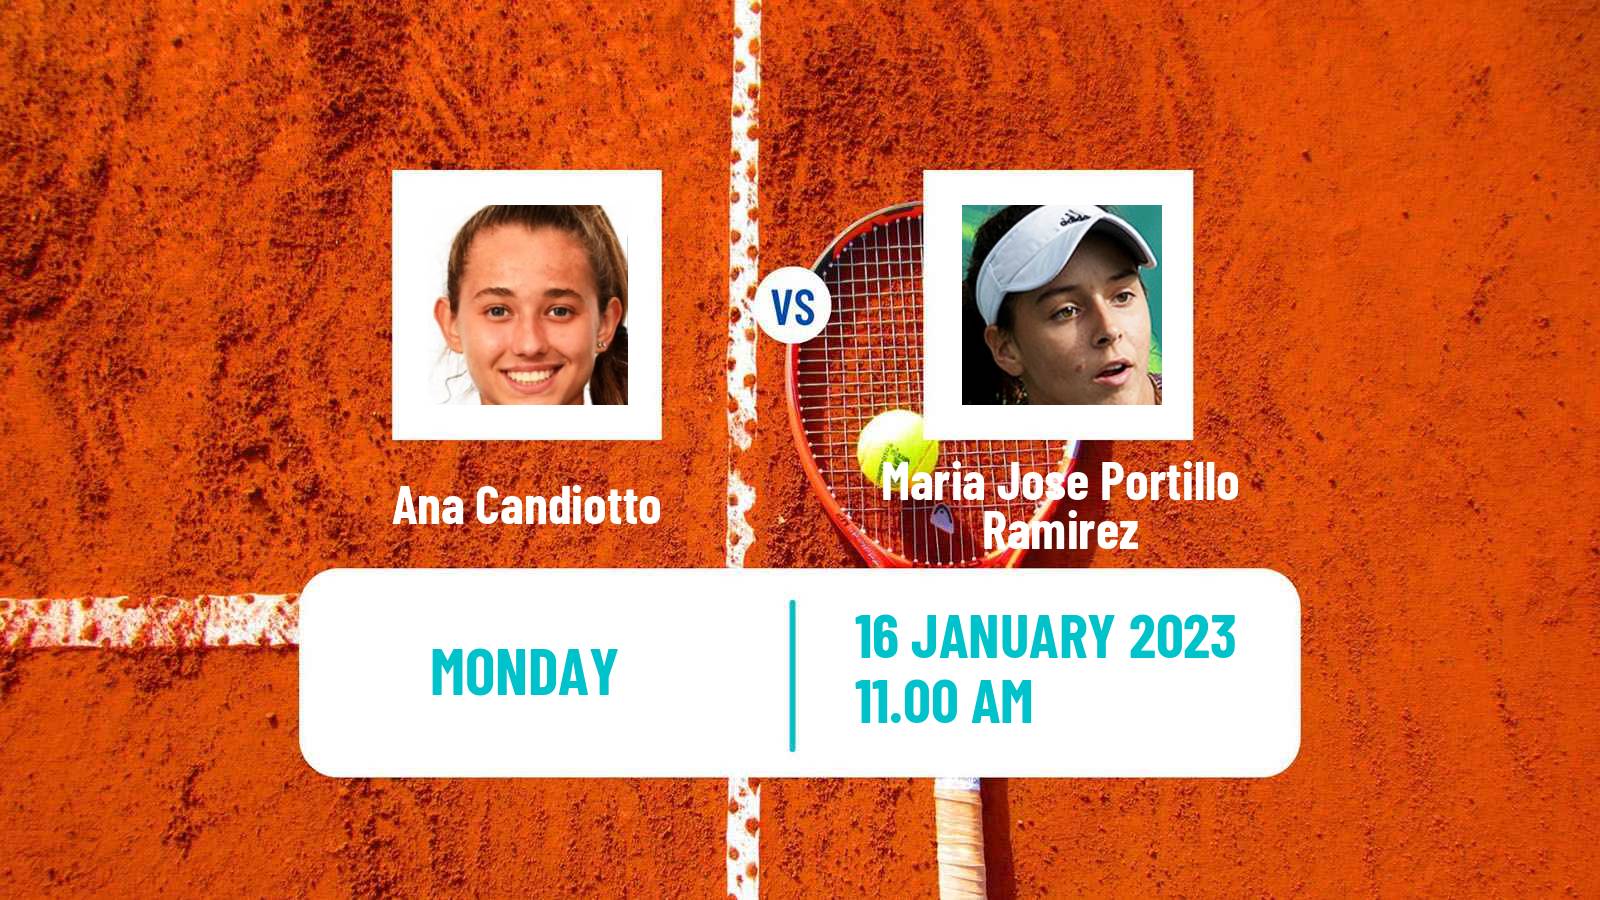 Tennis ITF Tournaments Ana Candiotto - Maria Jose Portillo Ramirez